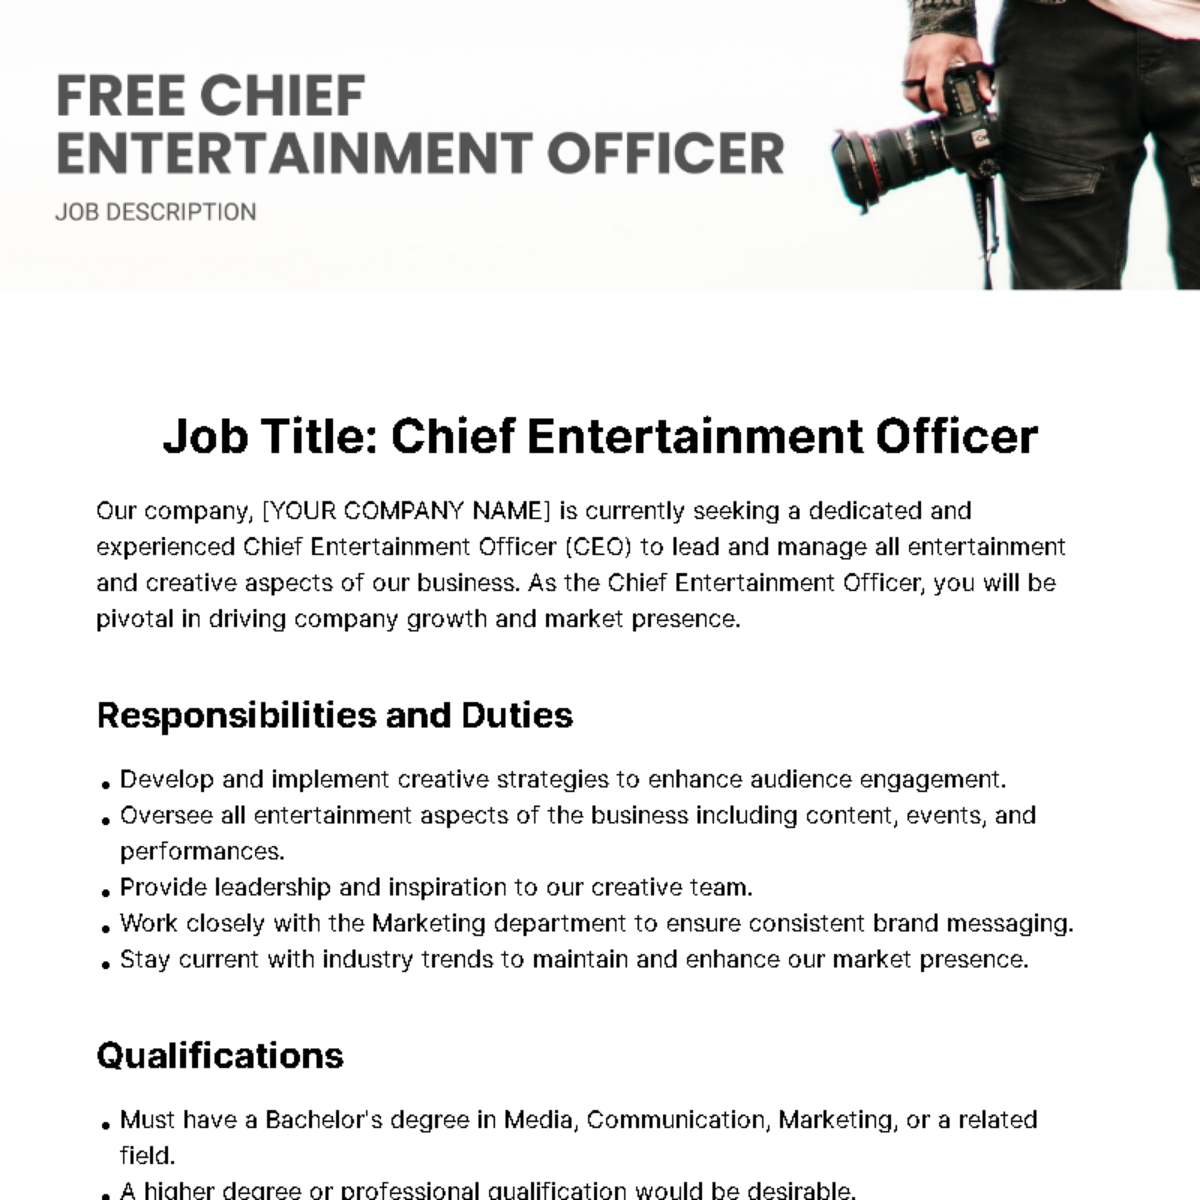 Chief Entertainment Officer Job Description Template